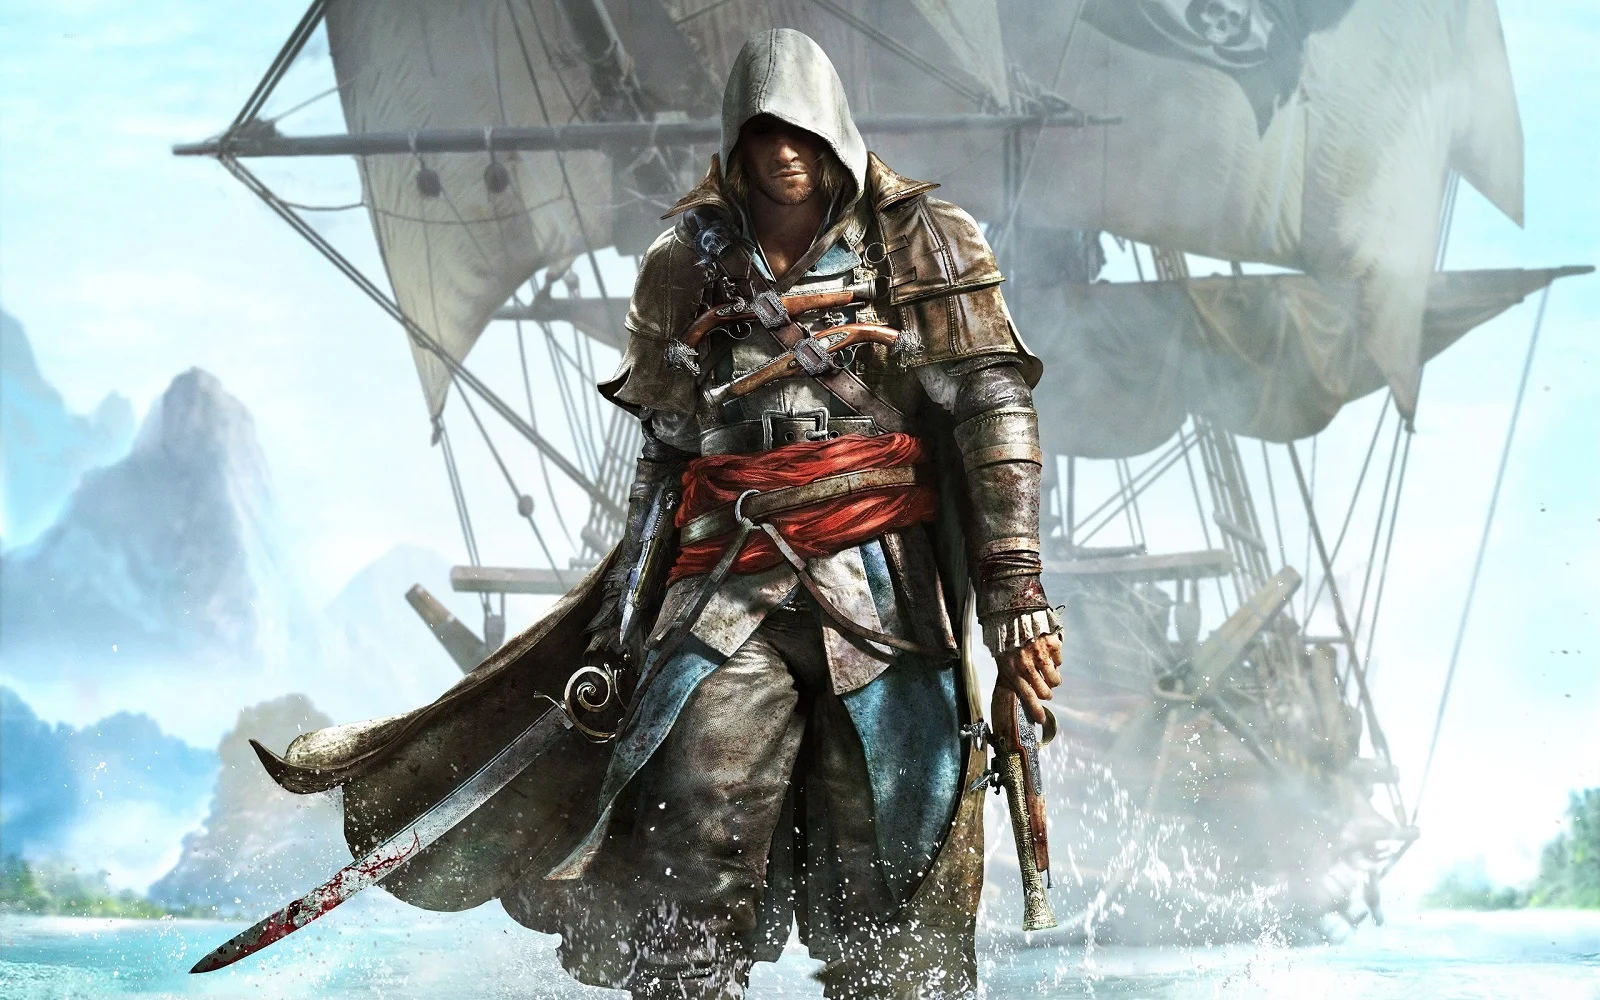 Assassin’s Creed 4 Remake Underway: Ubisoft's Development Plans Revealed